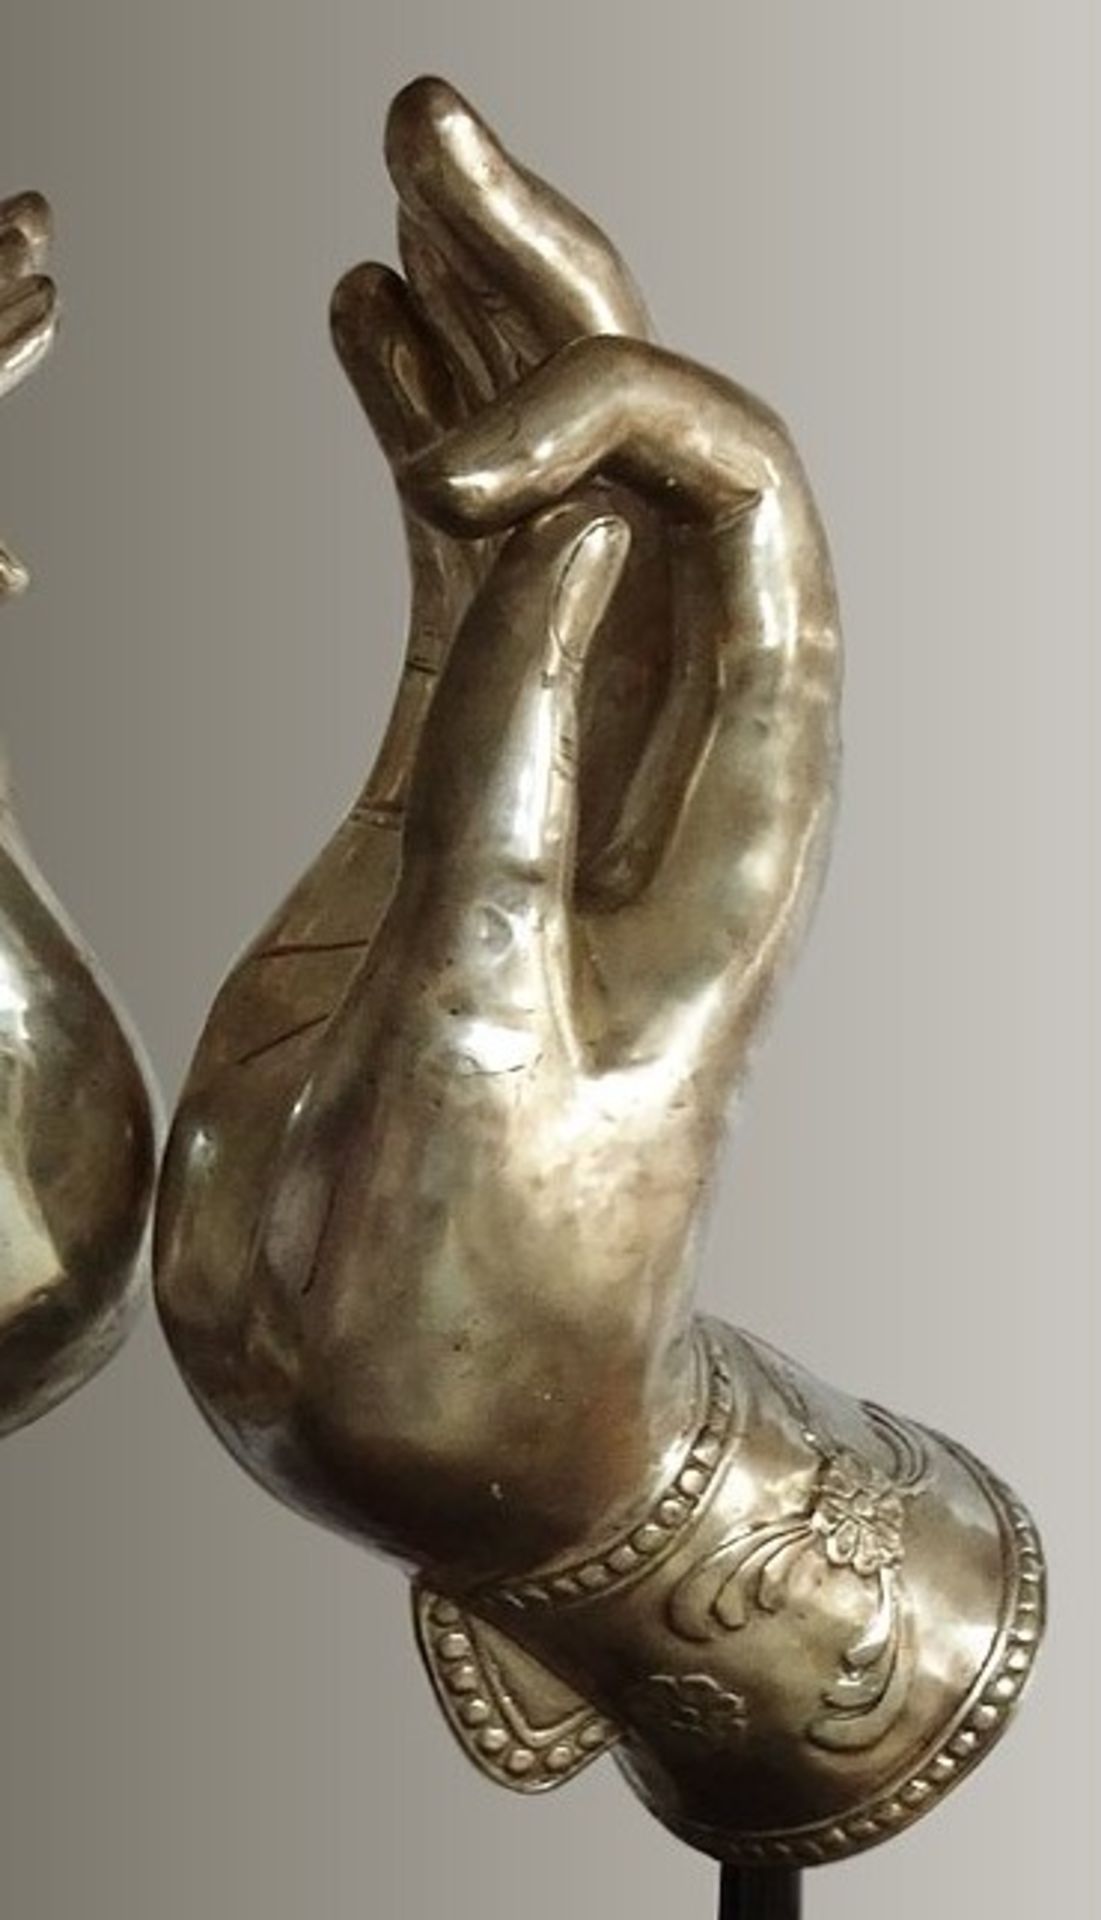 1 x Large Decorative Polished Metal Vitarka Mudra Buddha Hand - Beautifully Hand Crafted and - Image 9 of 12